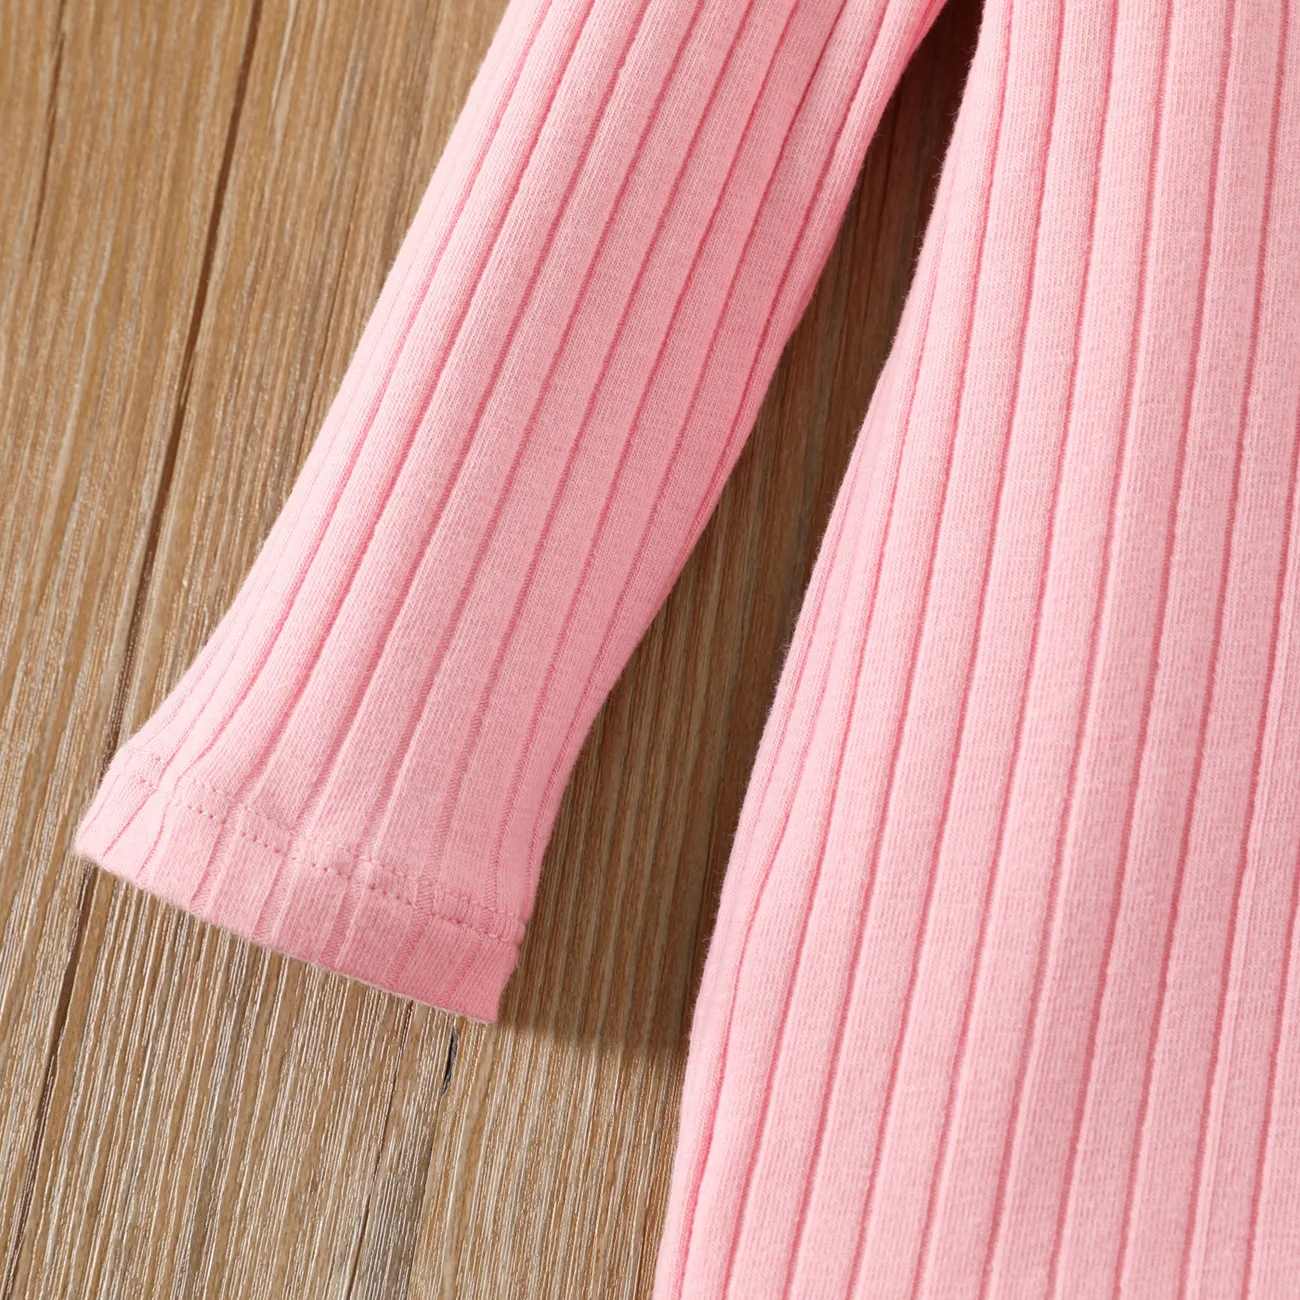 Toddler Girl Solid Basic Style Long Sleeves Dress Pink big image 1